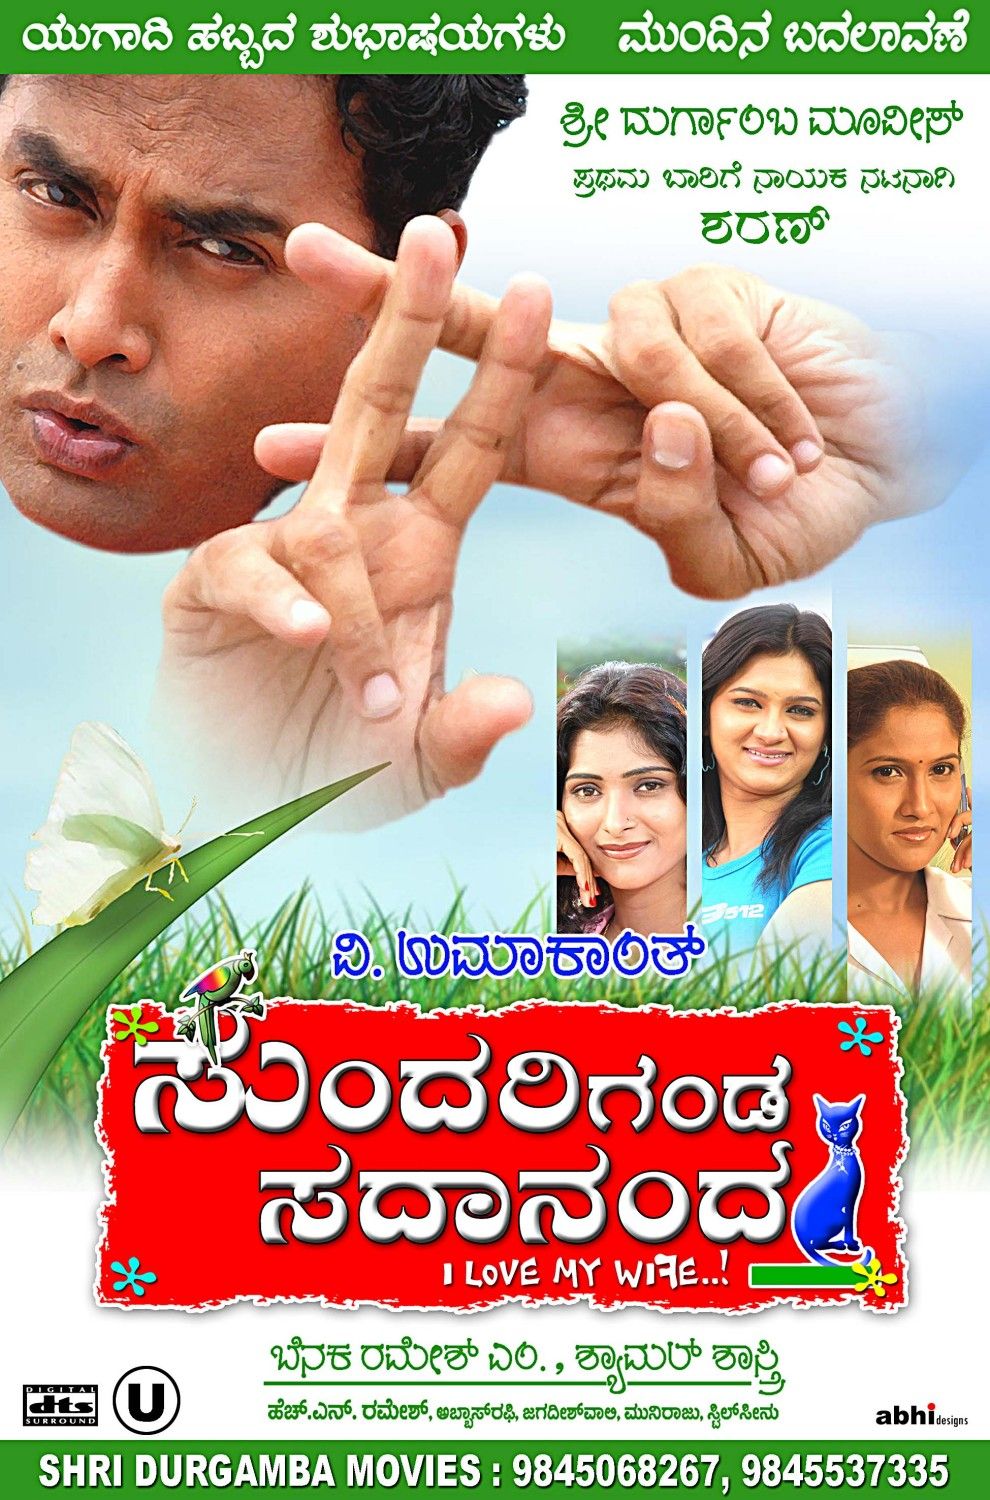 Extra Large Movie Poster Image for Sundari Ganda Sadananda (#3 of 5)